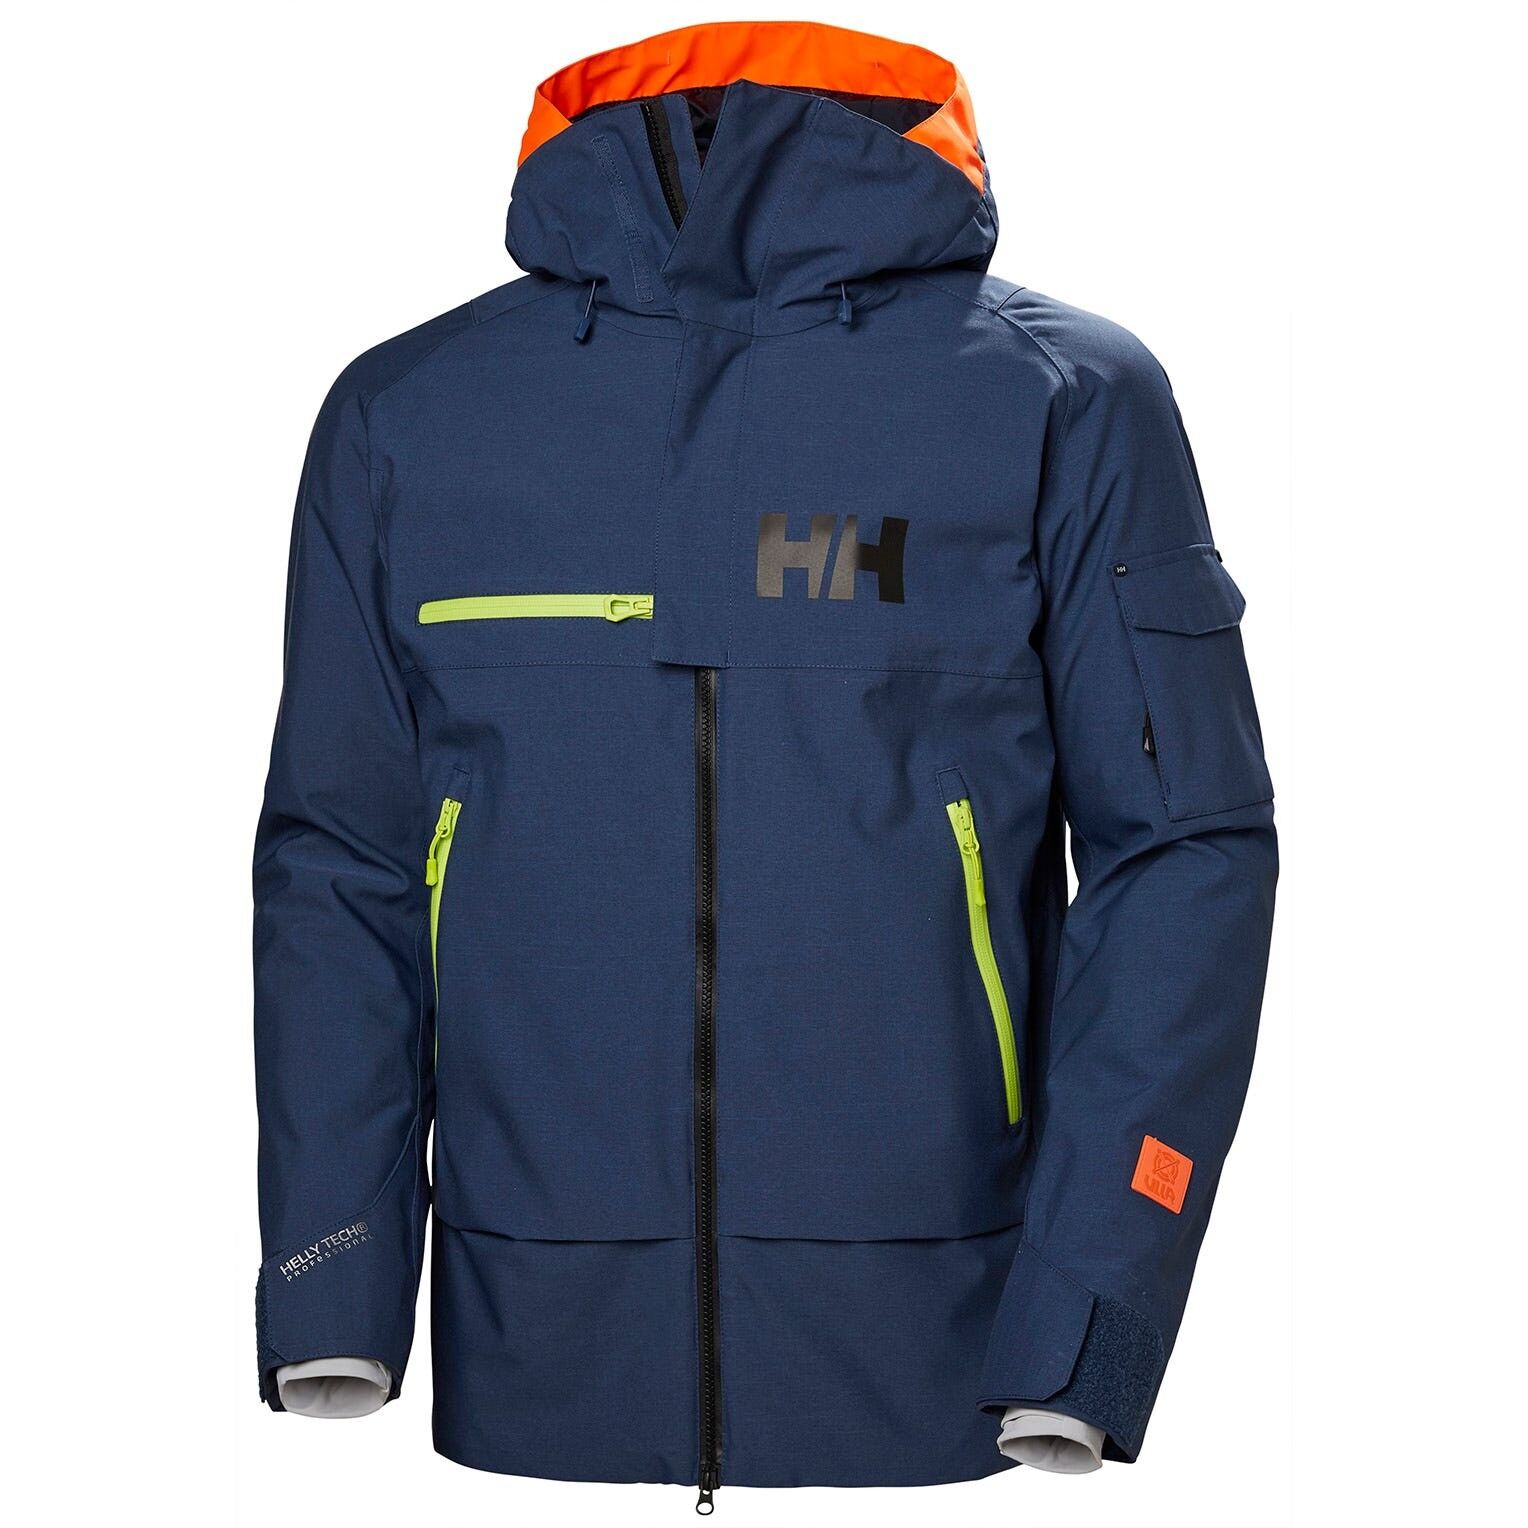 Helly Hansen Garibaldi Jacket - Ski jacket - Men's